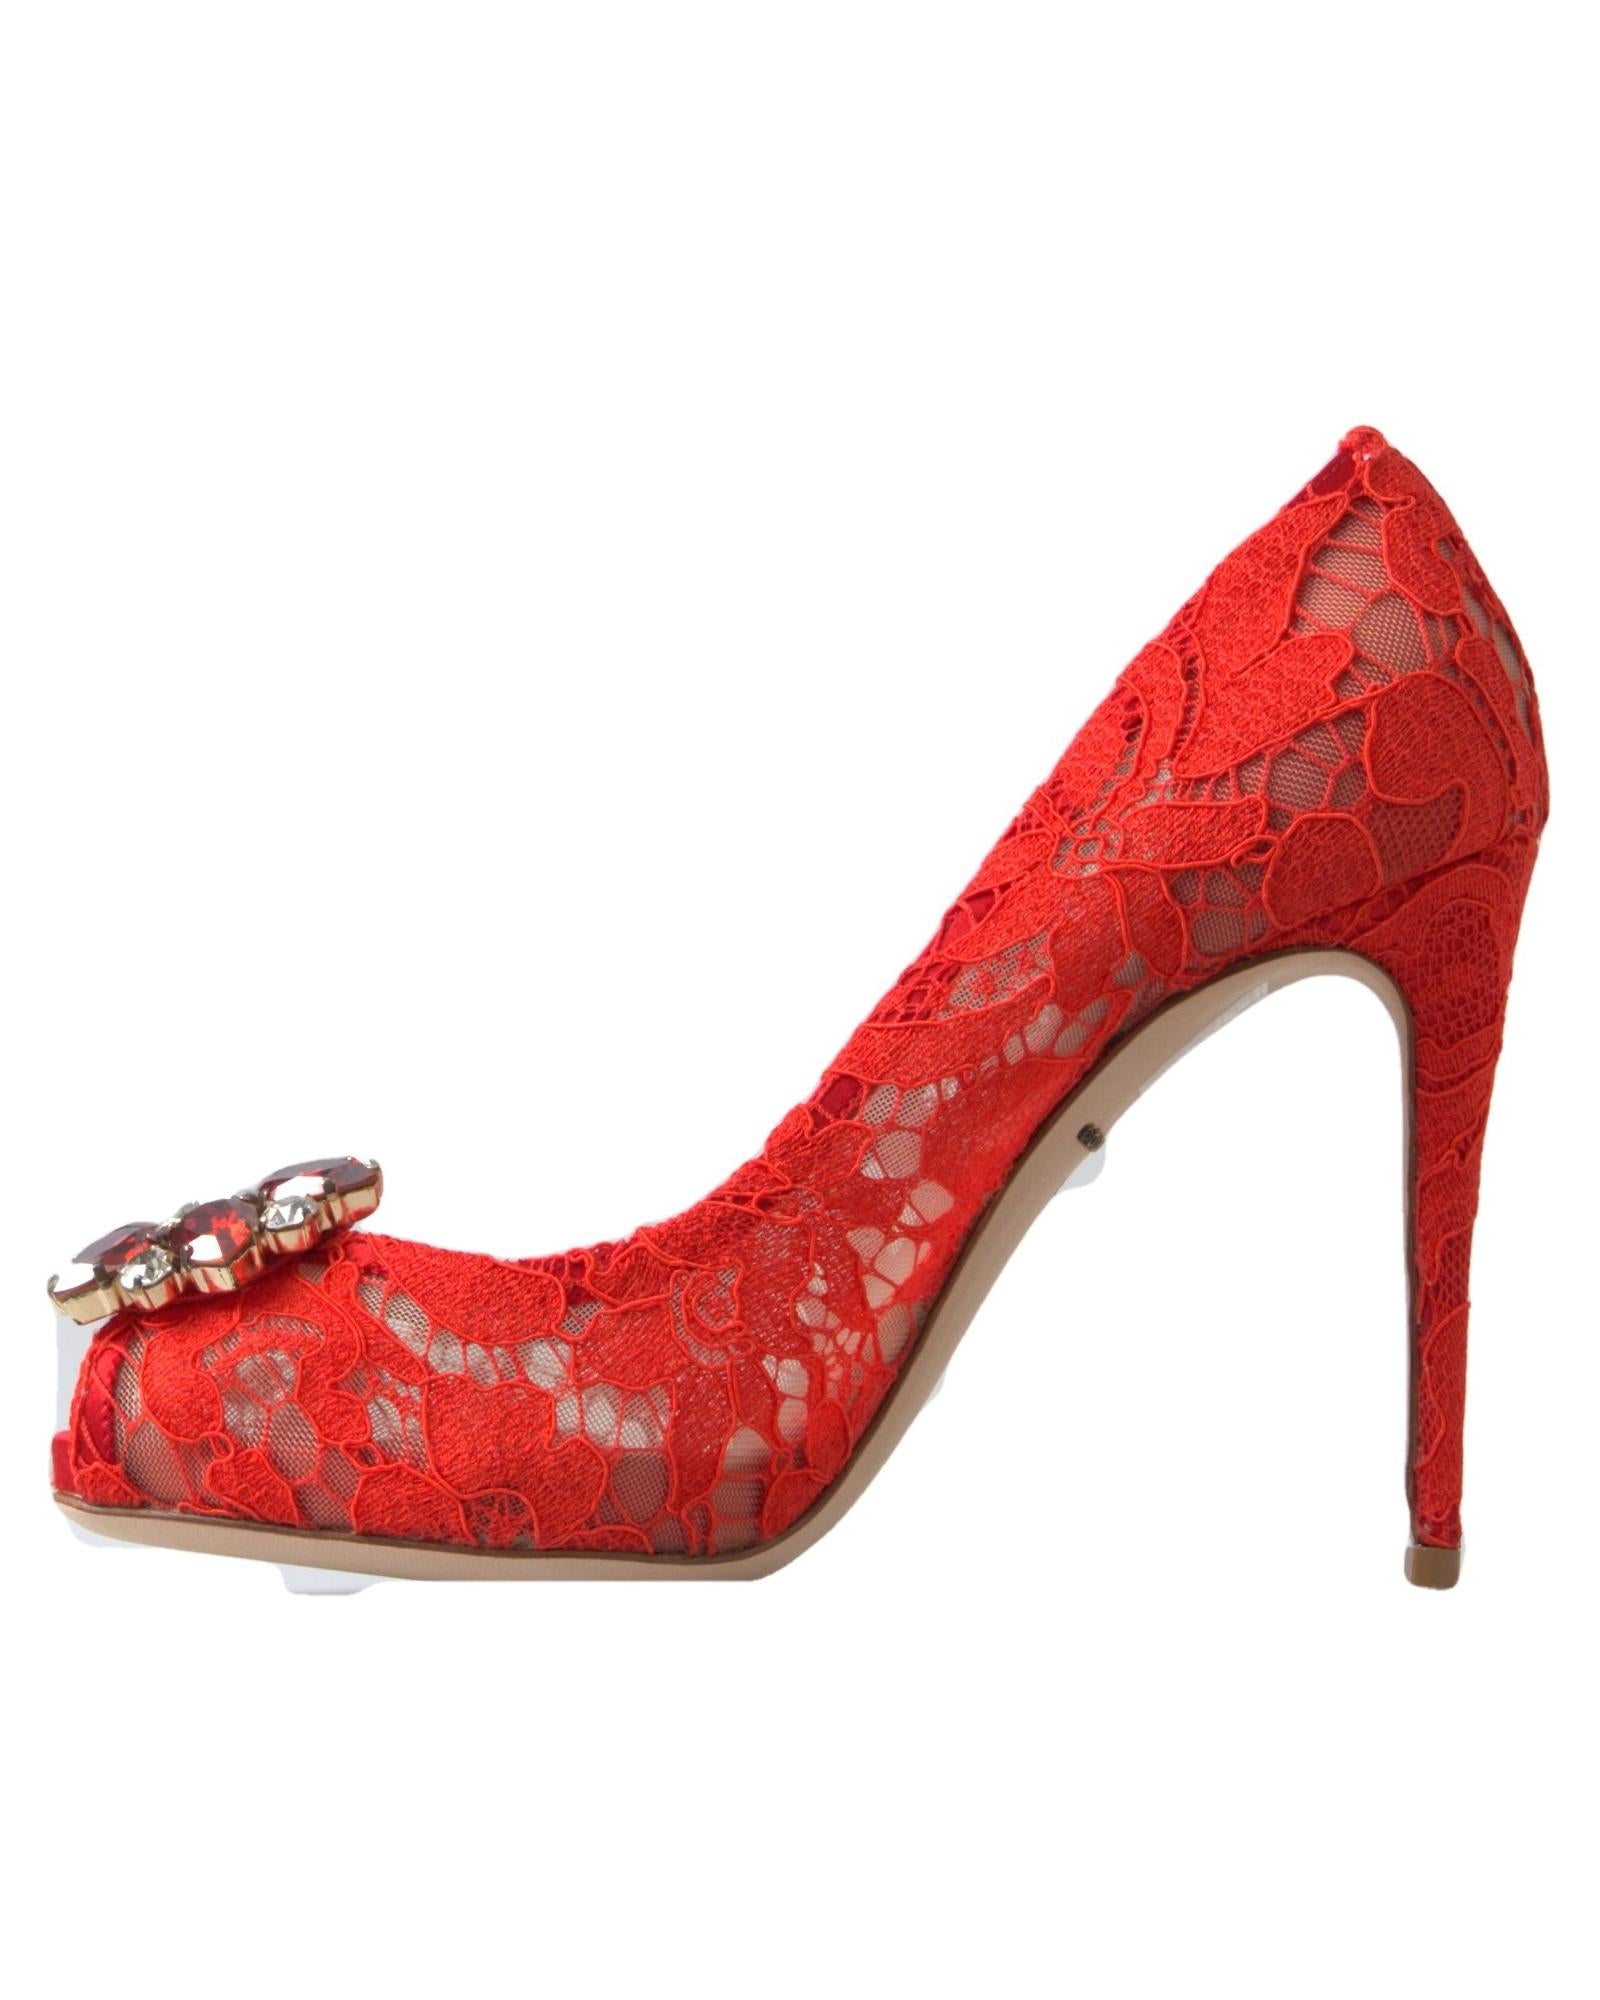 Dolce & Gabbana Women's Red Taormina Lace Crystal Heels Pumps Shoes - 37.5 EU